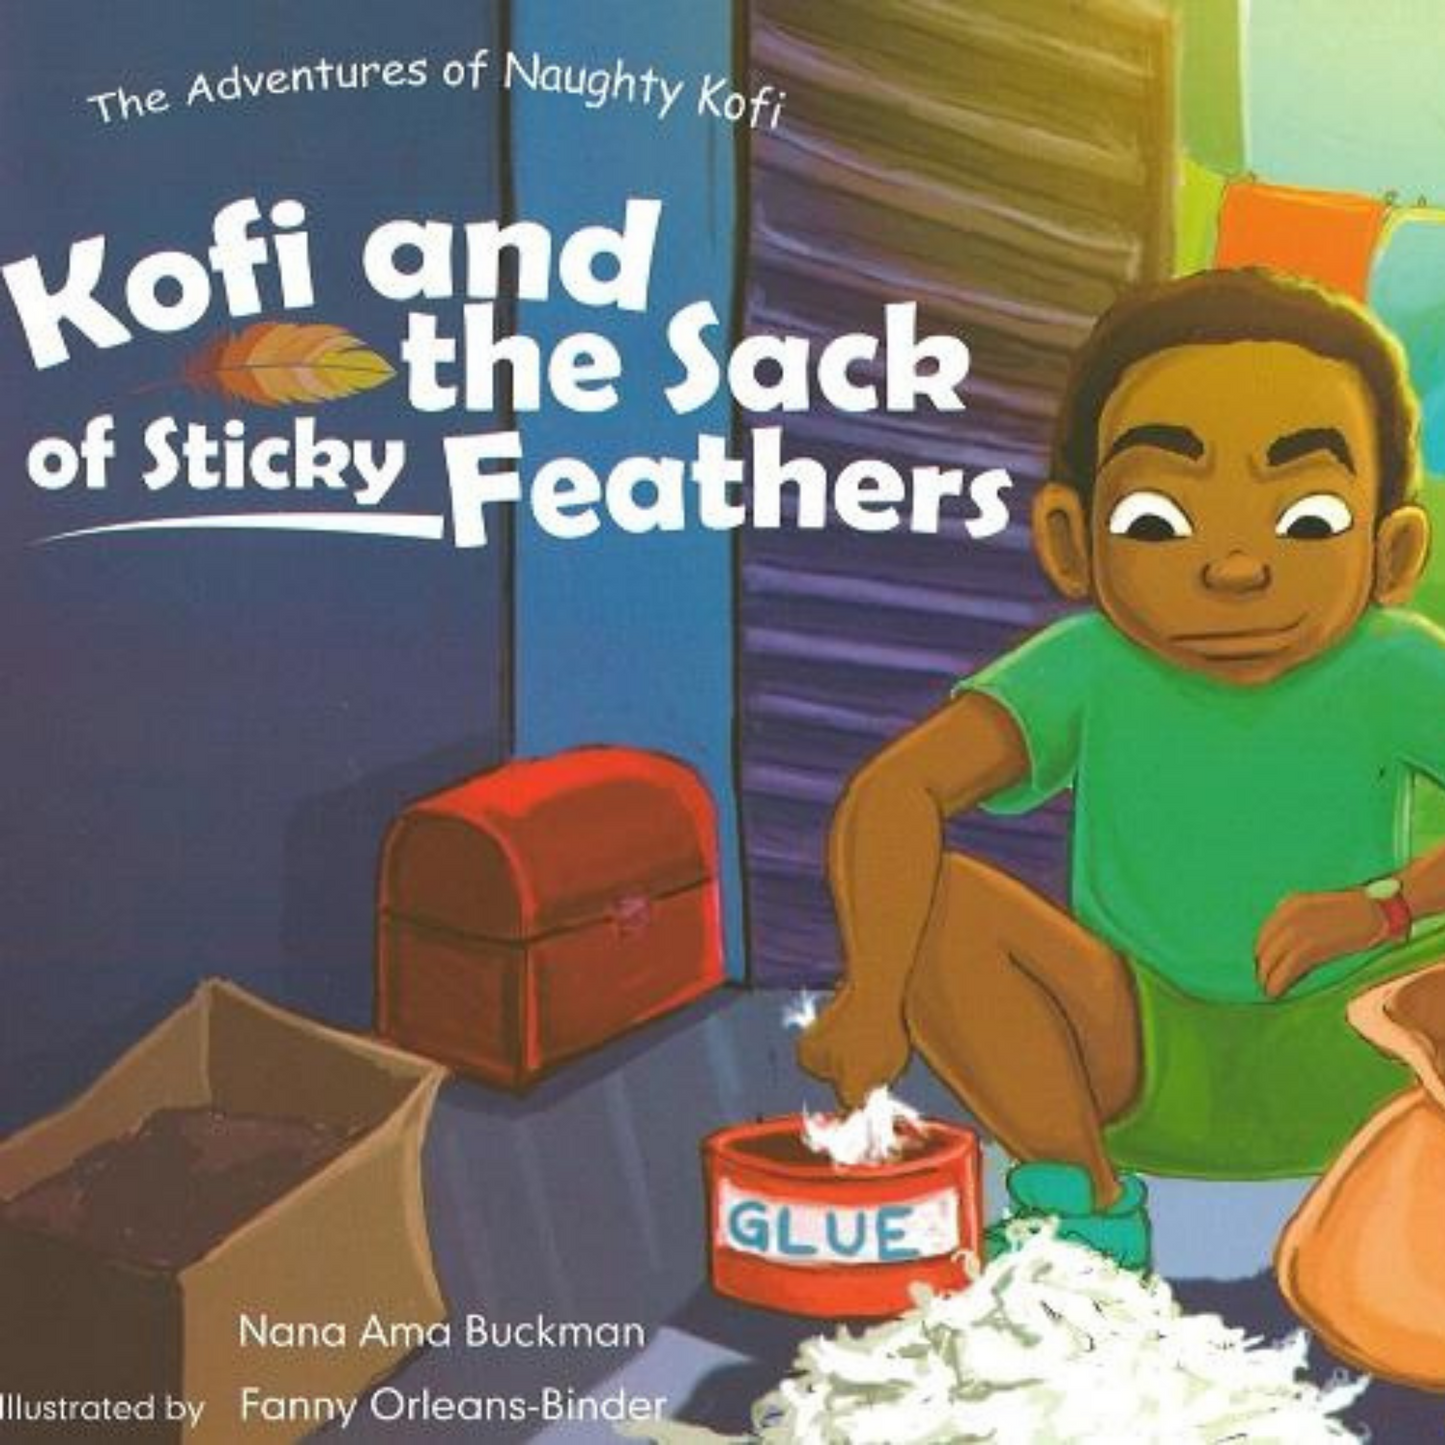 Kofi and the sack of sticky feathers